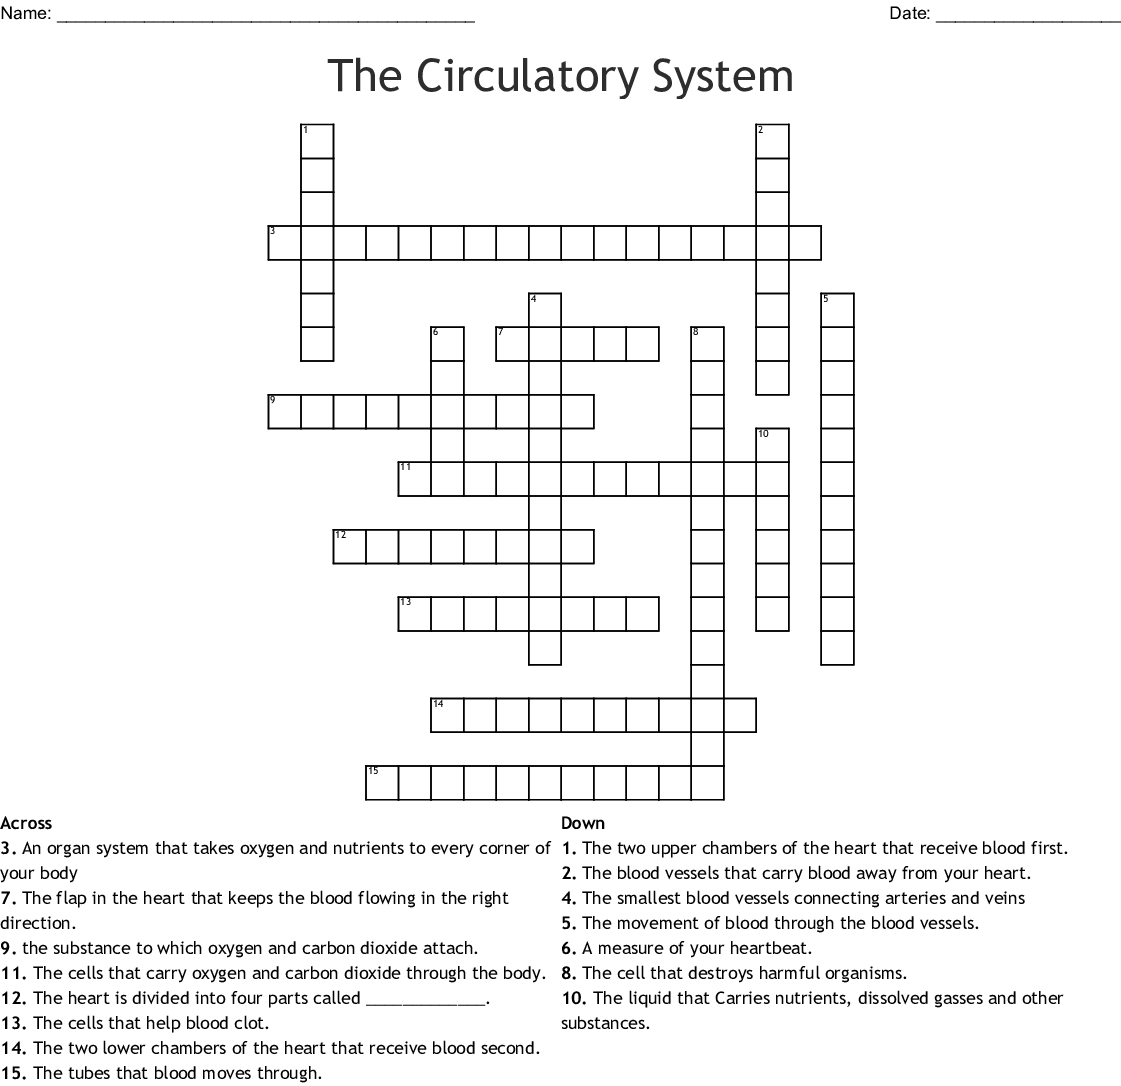 Printable Crossword Circulatory System Puzzles Pdf